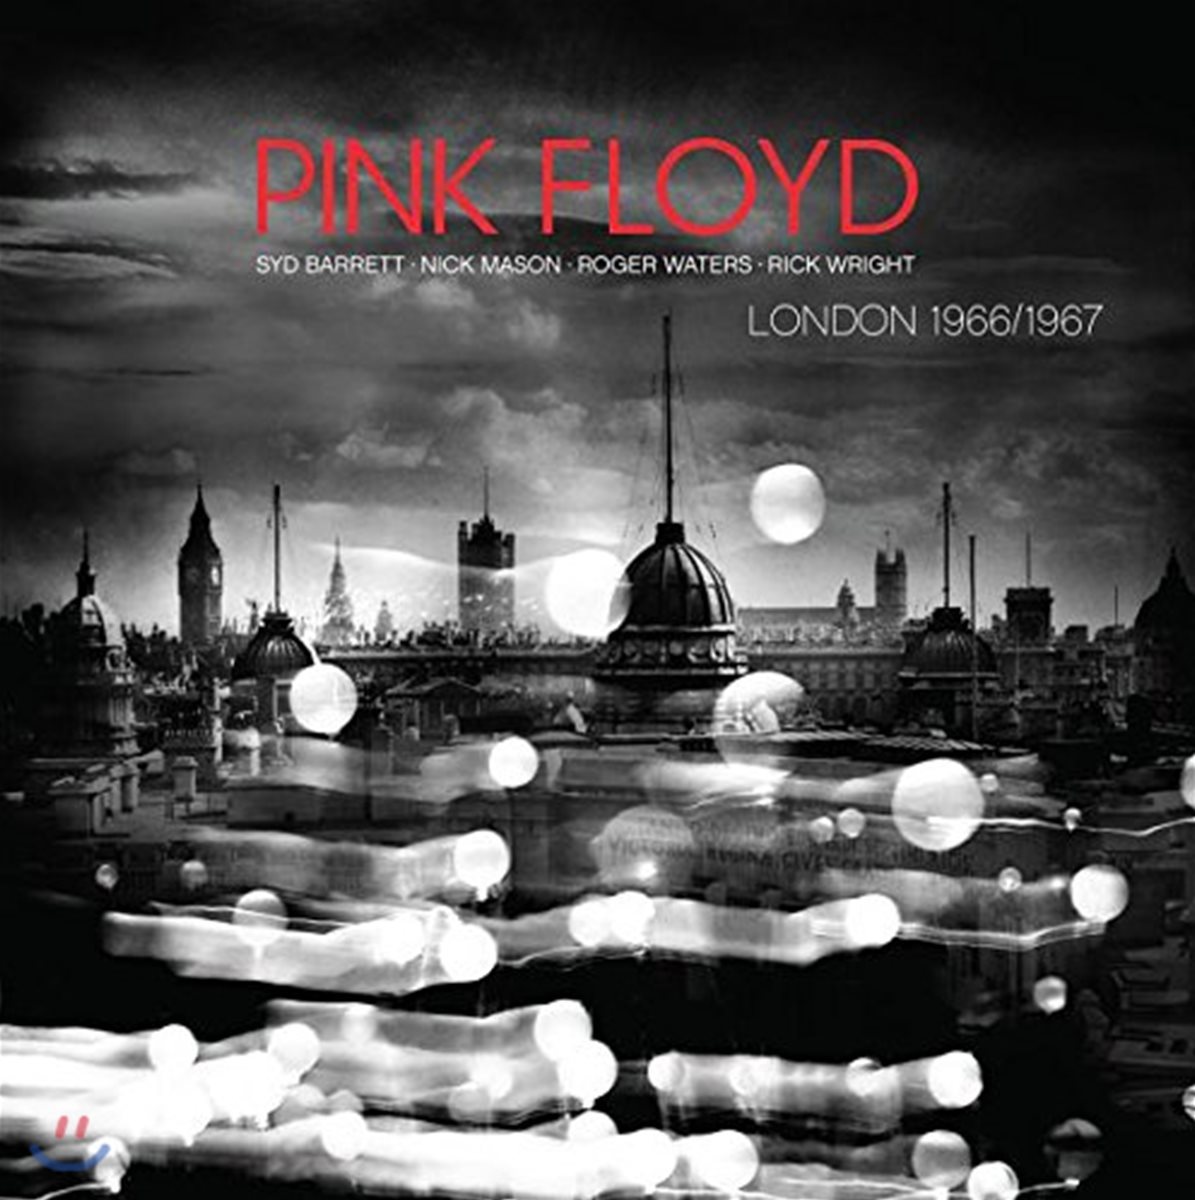 Pink Floyd - London 1966 / 1967 핑크 플로이드 데모 세션 [LP]